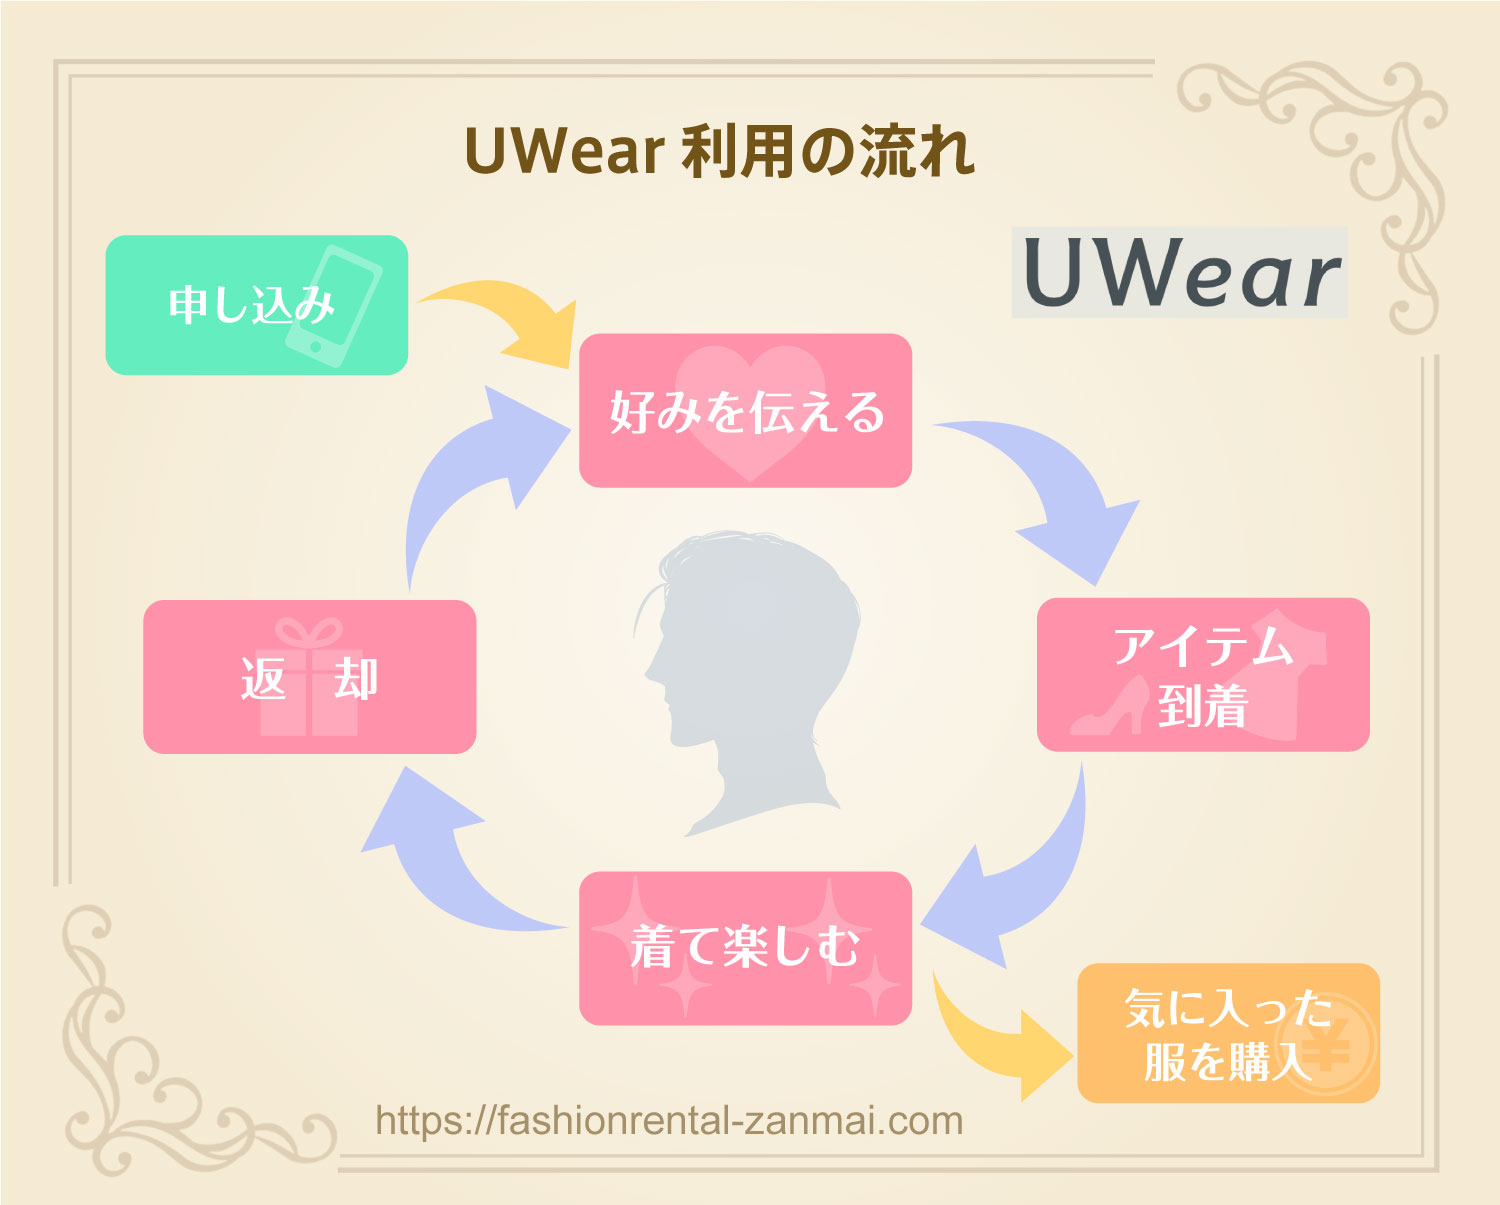 UWearの利用の流れ図解